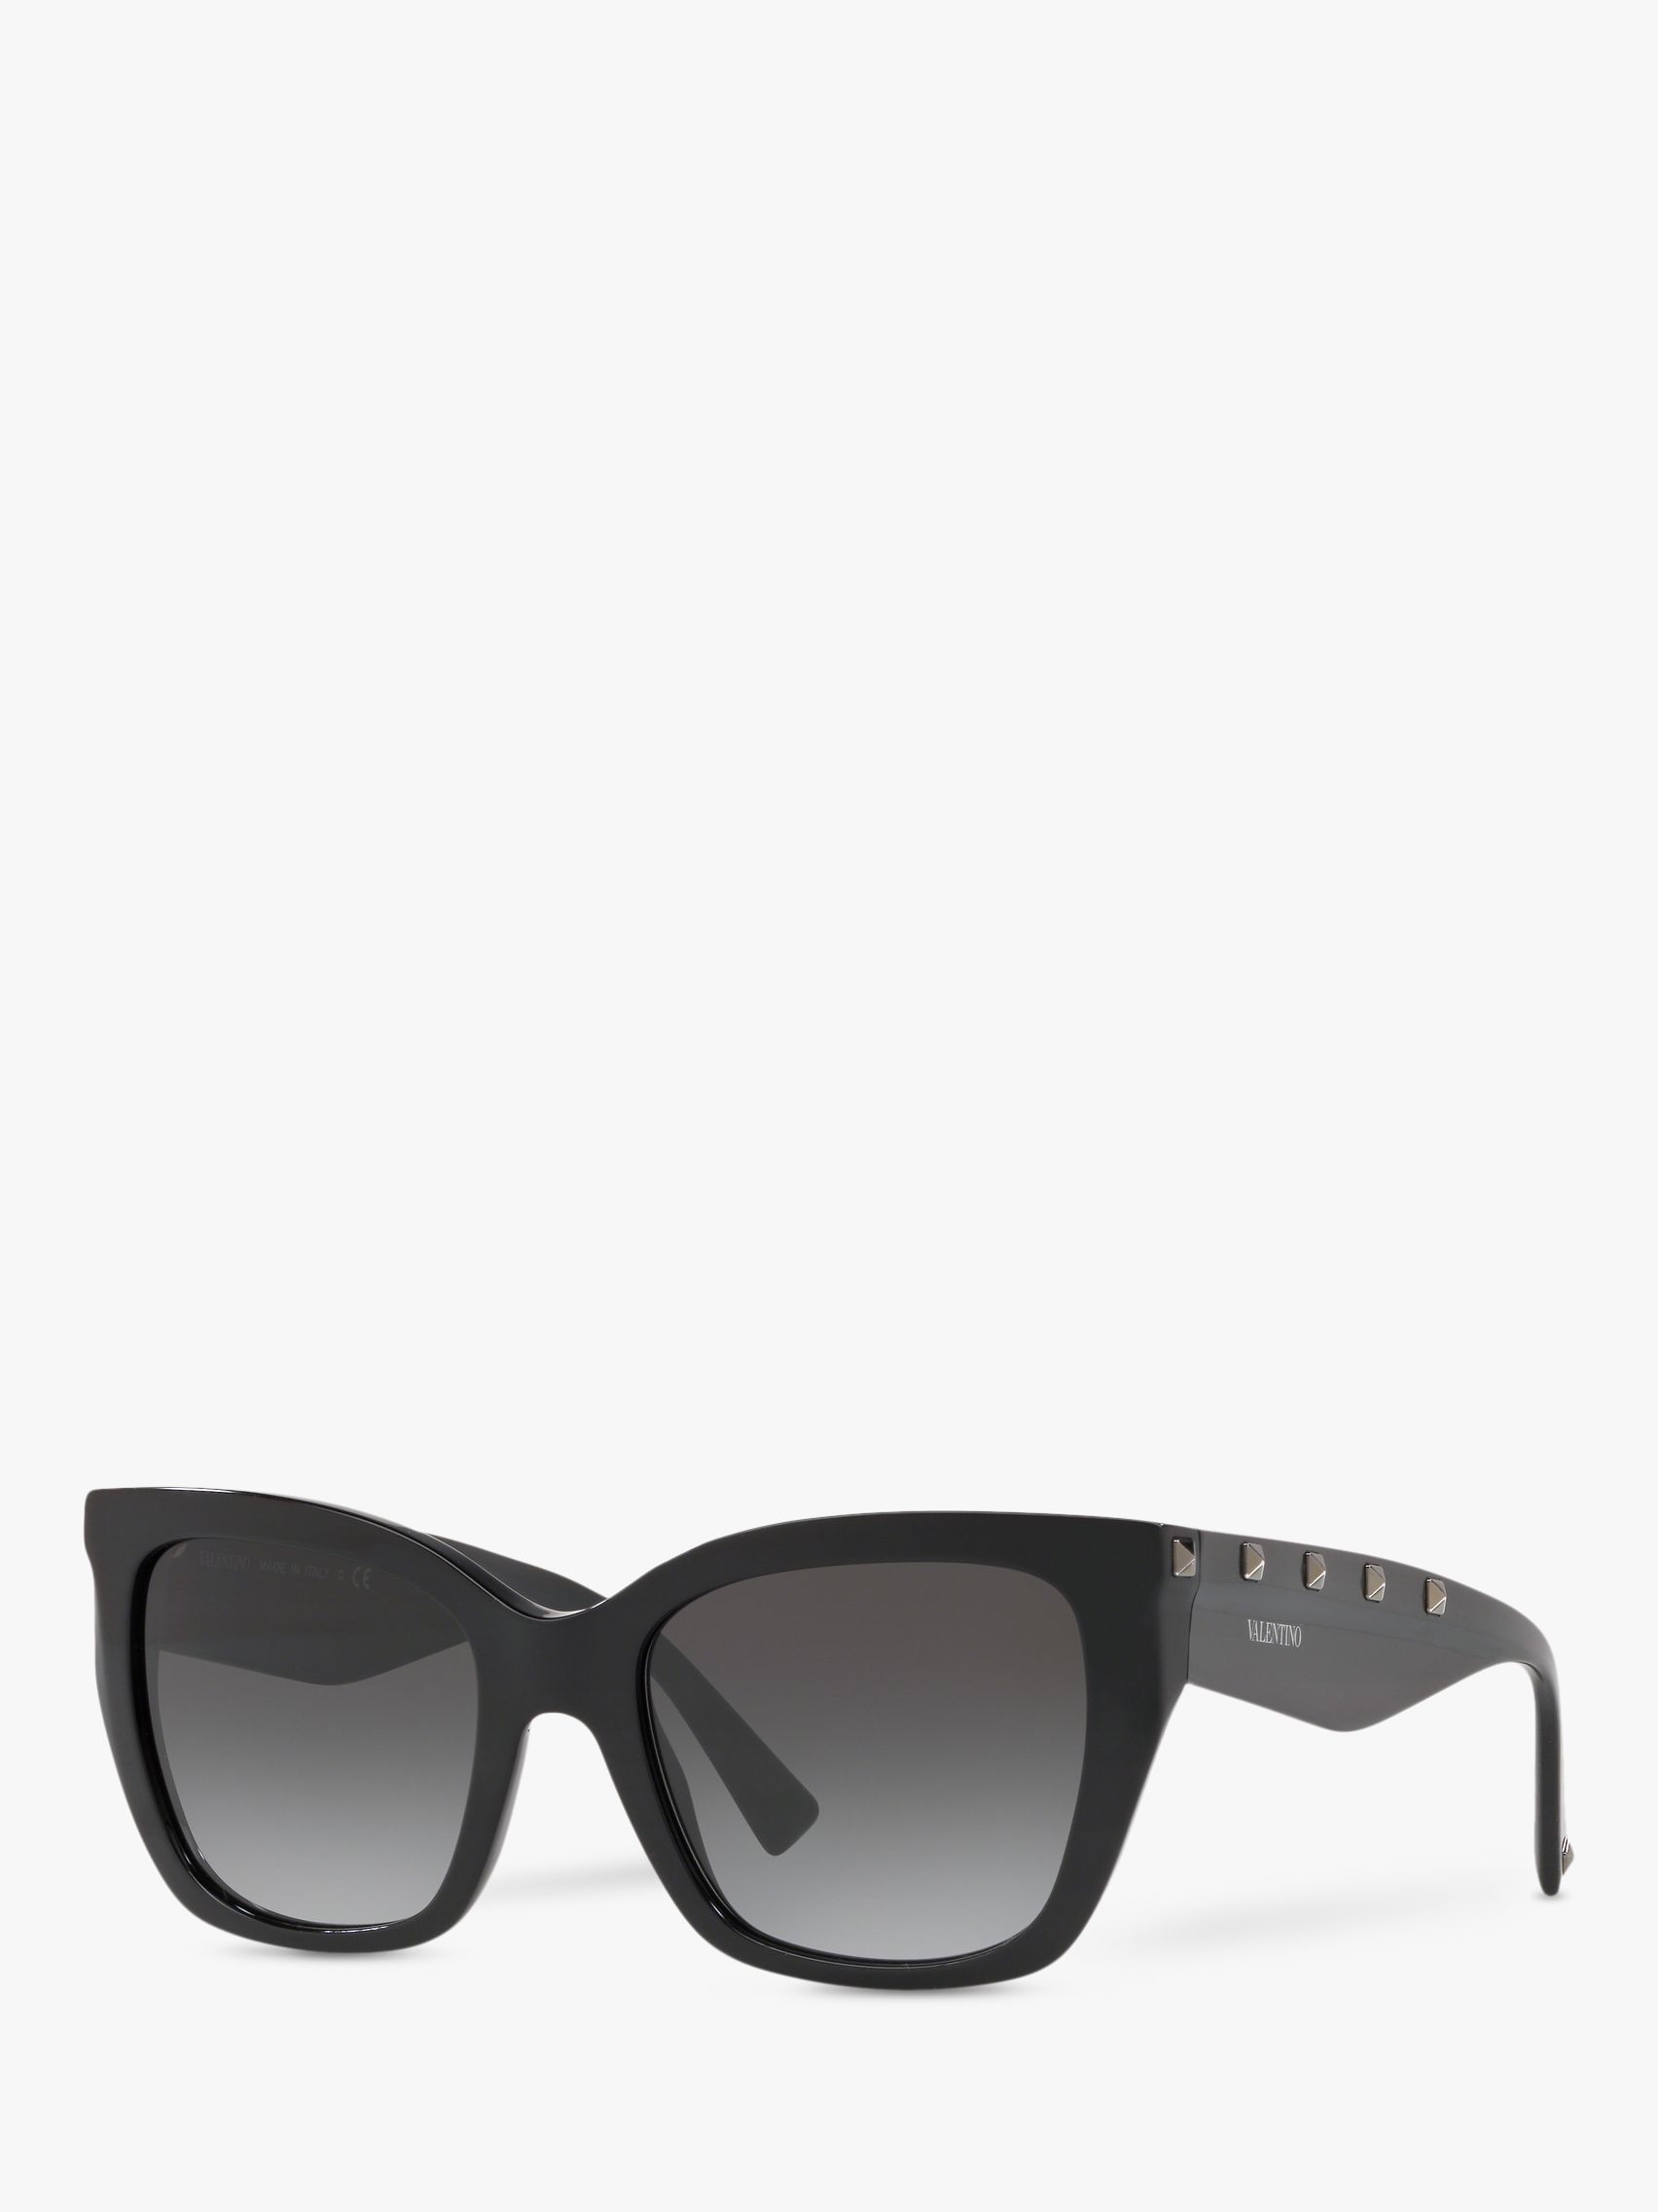 Valentino VA4048 Women's Studded Cat's Eye Sunglasses, Black/Black Gradient